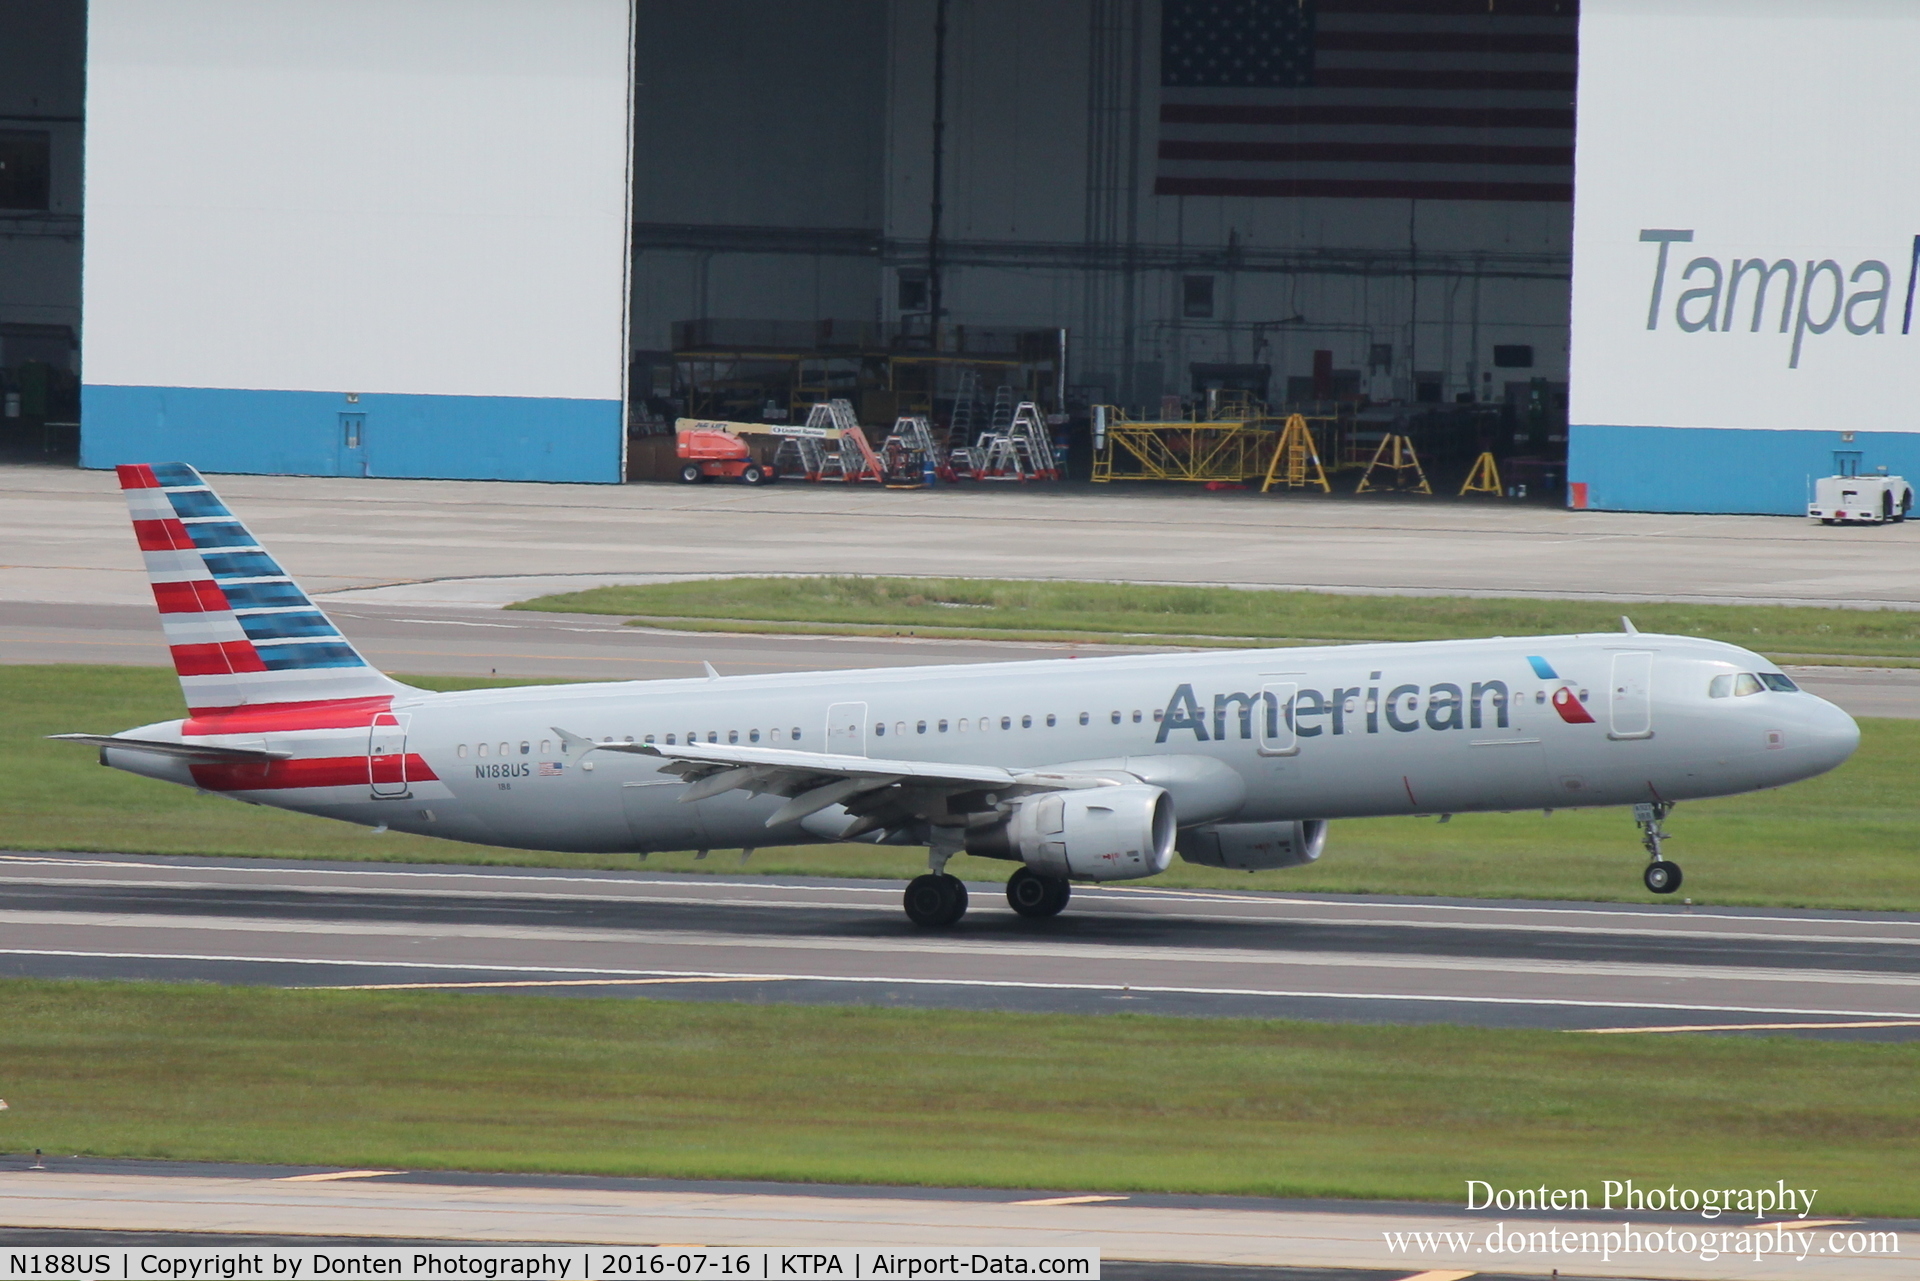 N188US, 2002 Airbus A321-211 C/N 1724, American Flight 1808 (N188US) arrives at Tampa International Airport following flight from Charlotte/Douglas International Airport